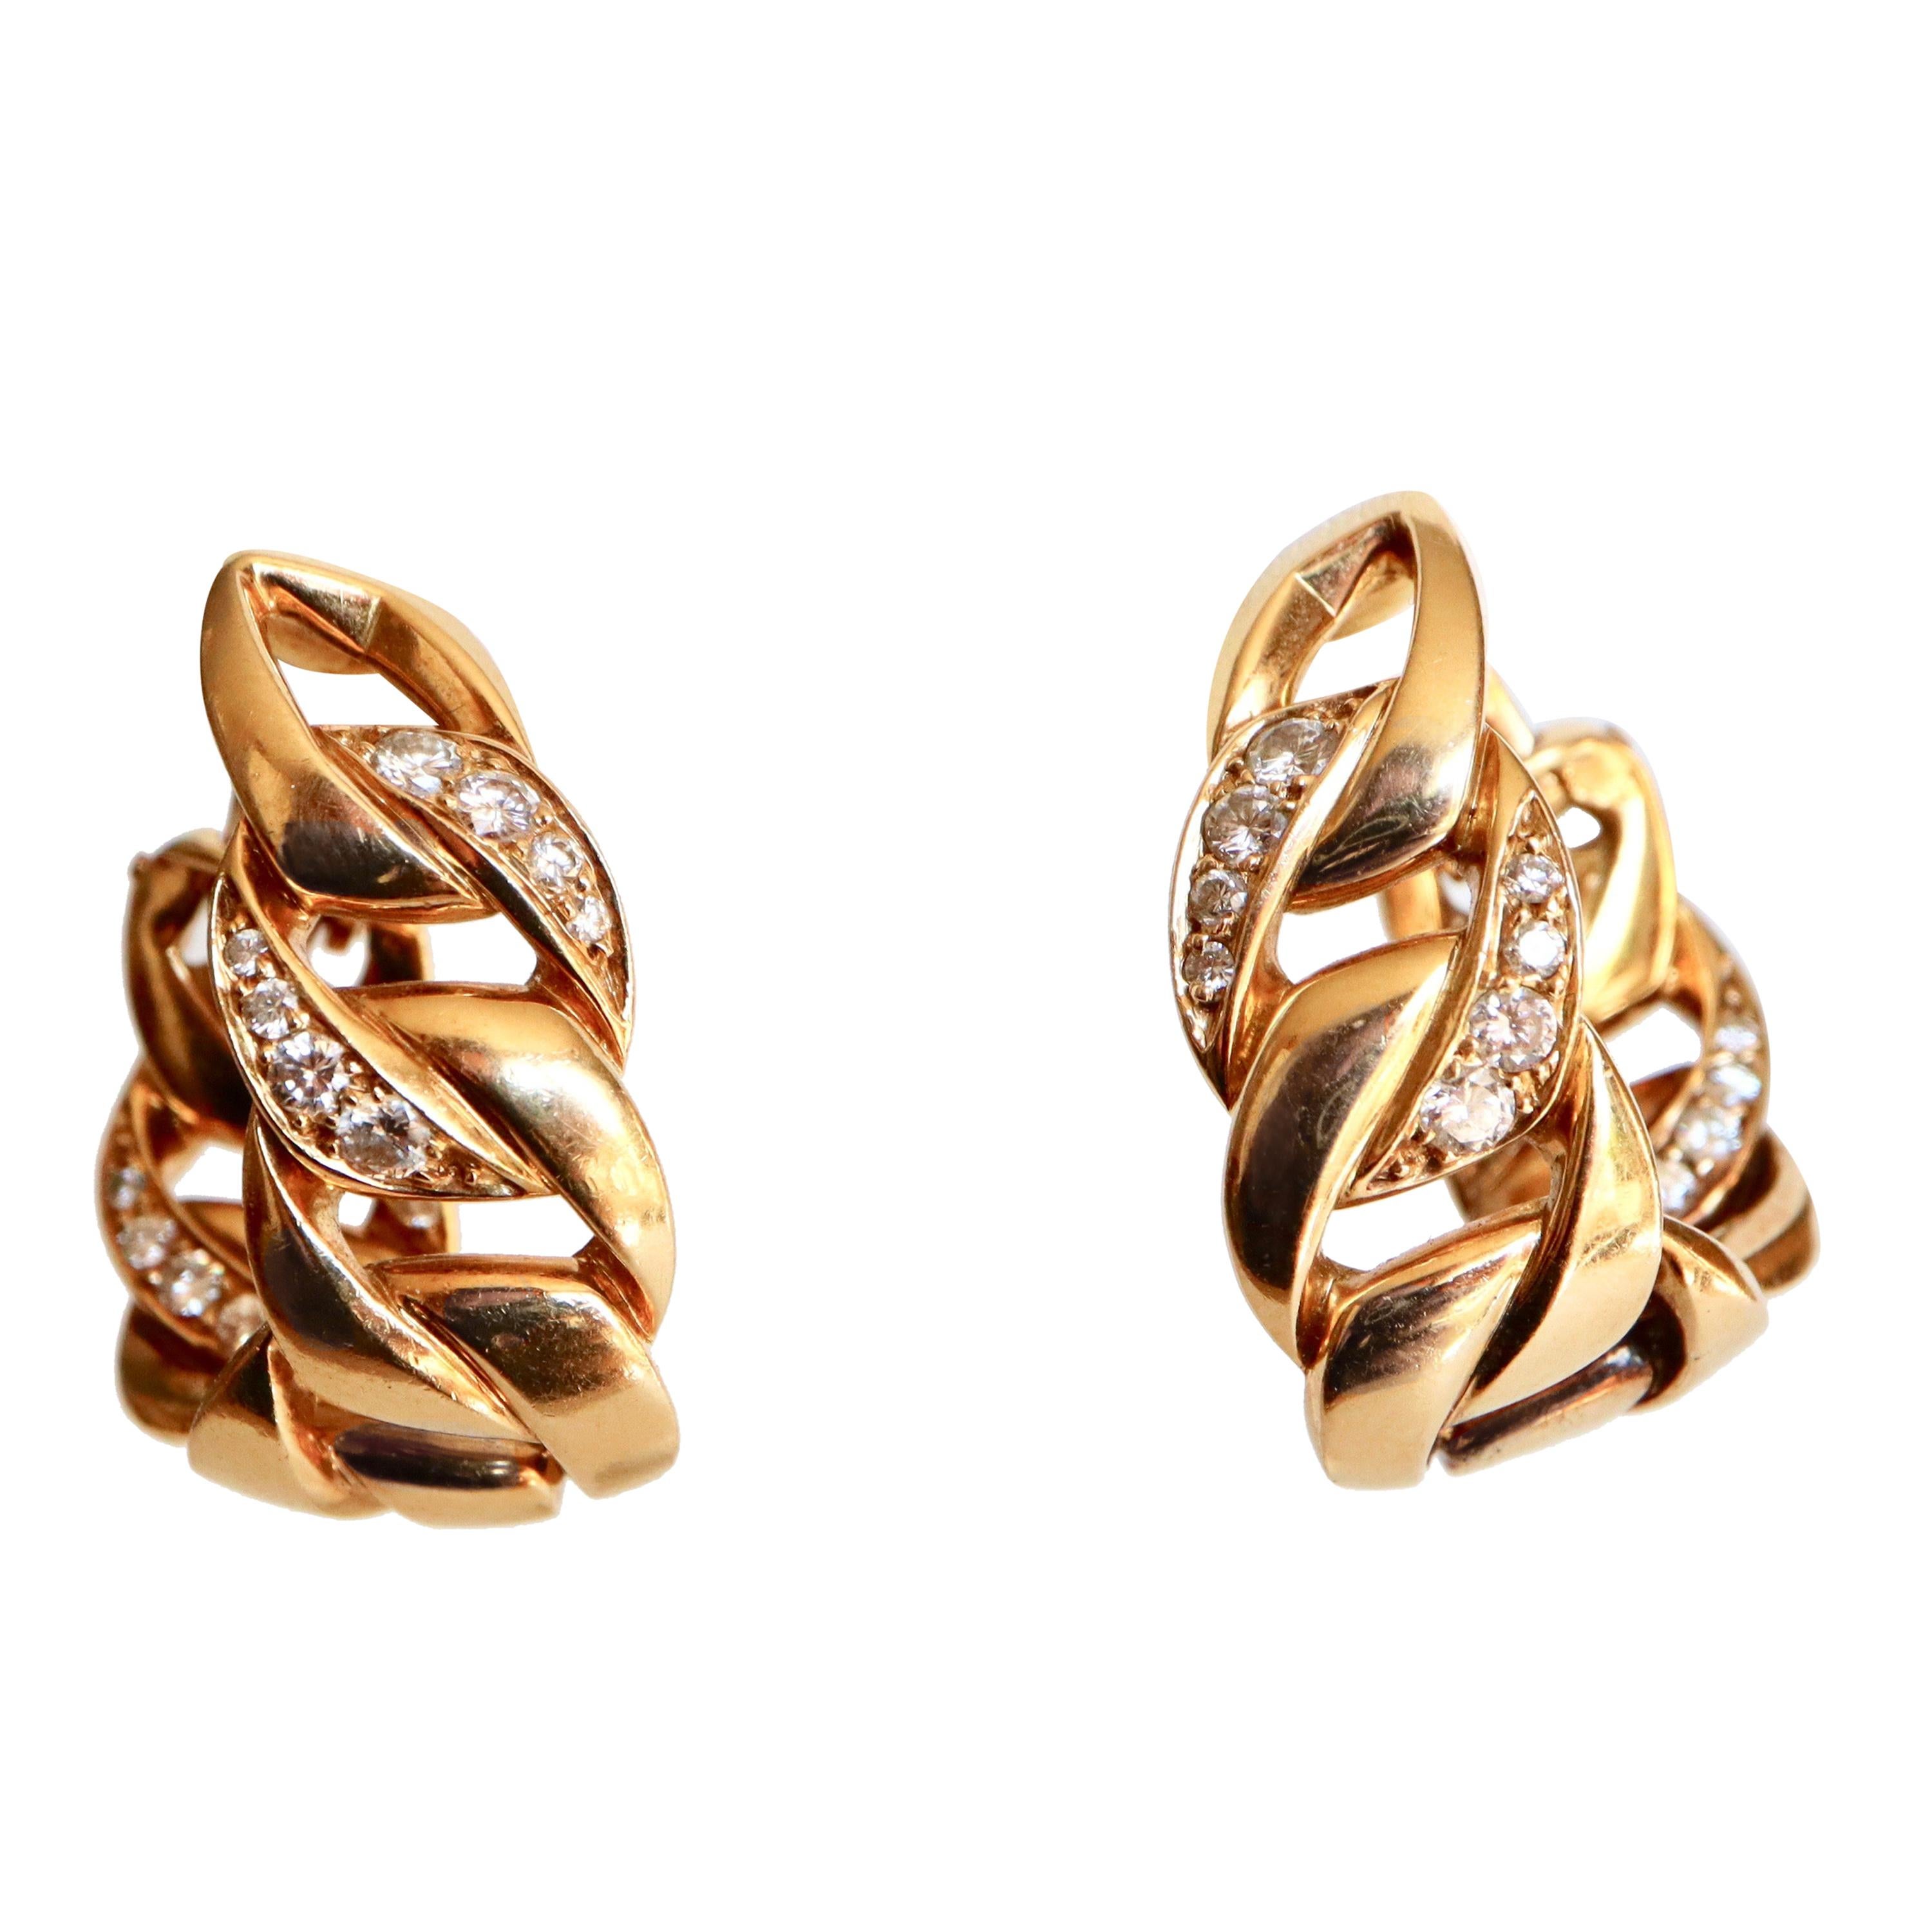 Cartier 18 Karat Yellow Gold Earrings and Diamonds, Rigid Curb Links Clips